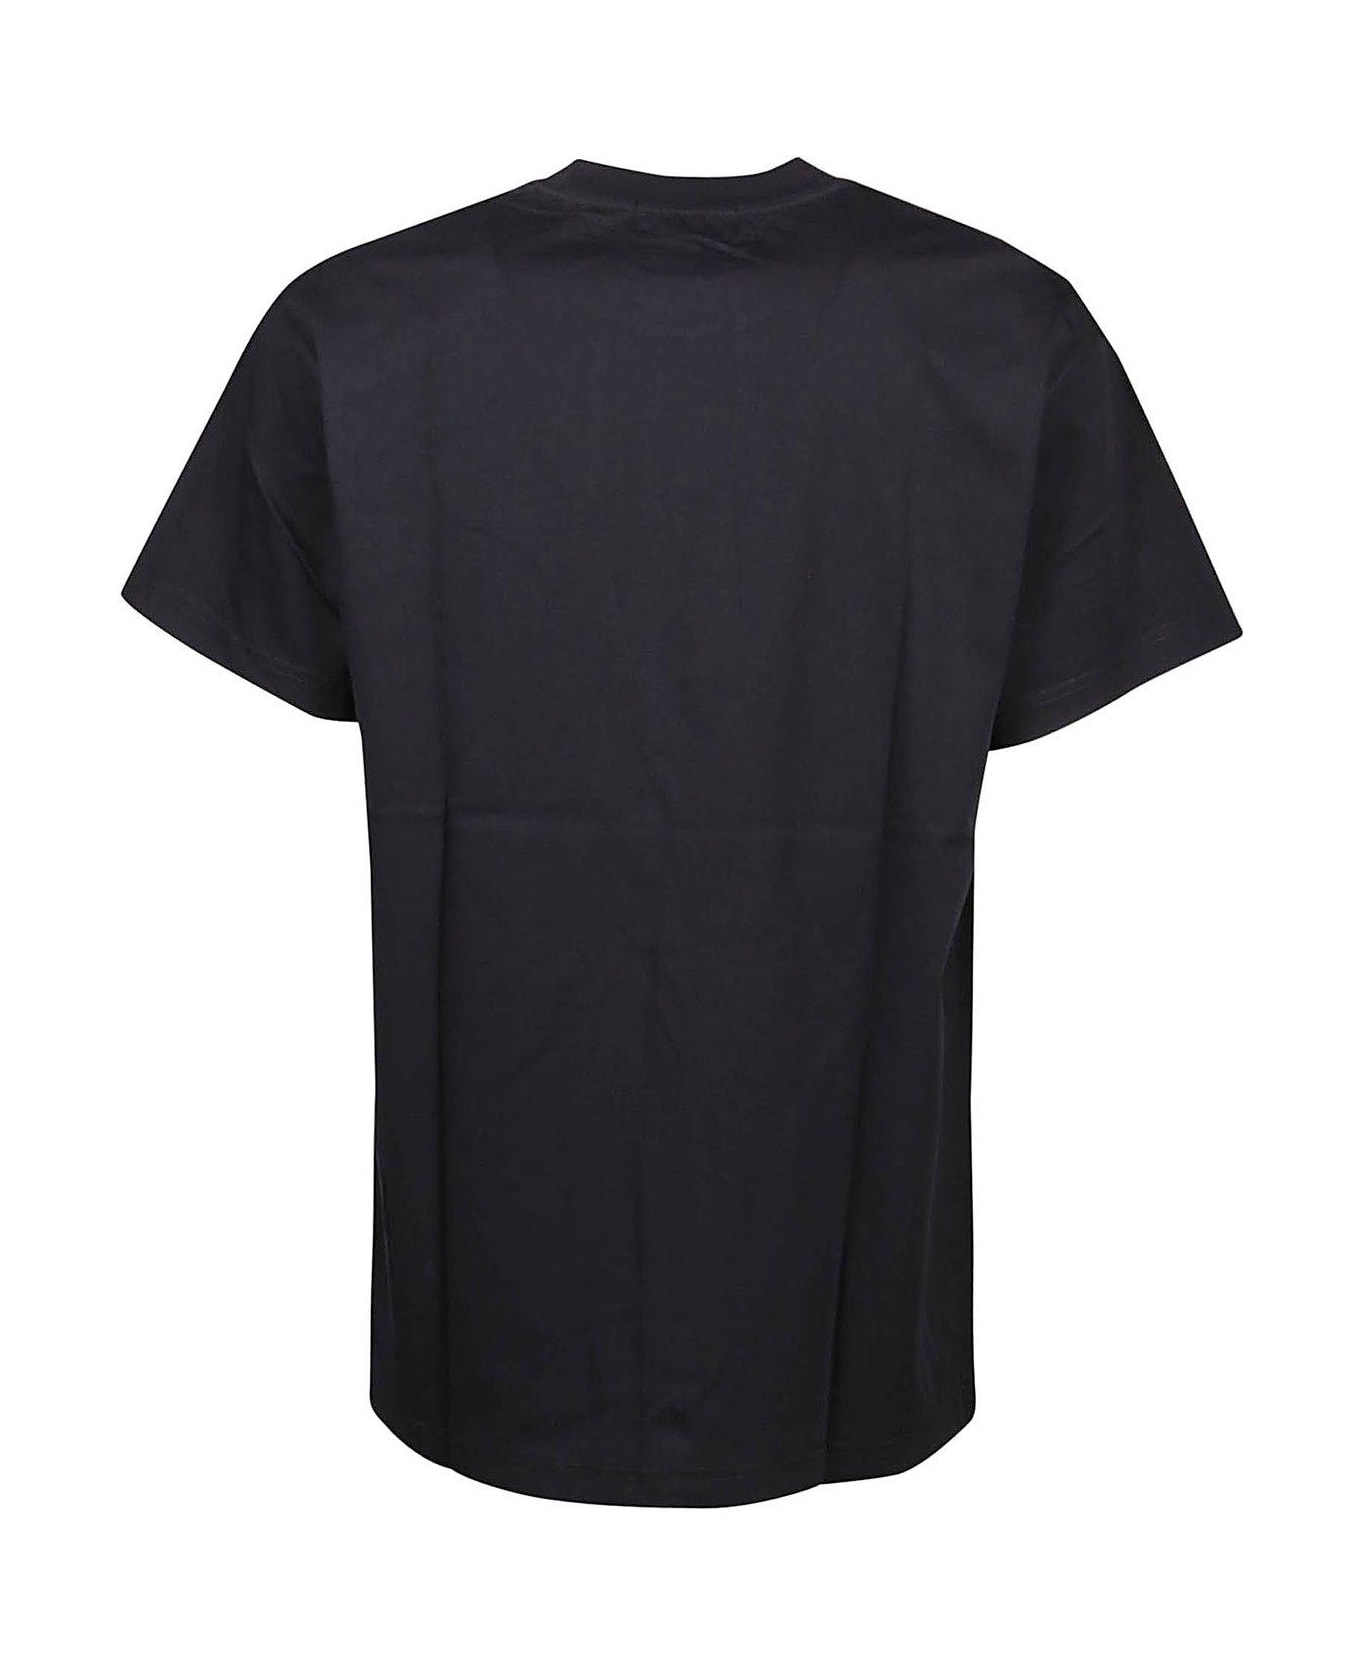 AMBUSH Logo Detailed Three-pack T-shirt - Black シャツ